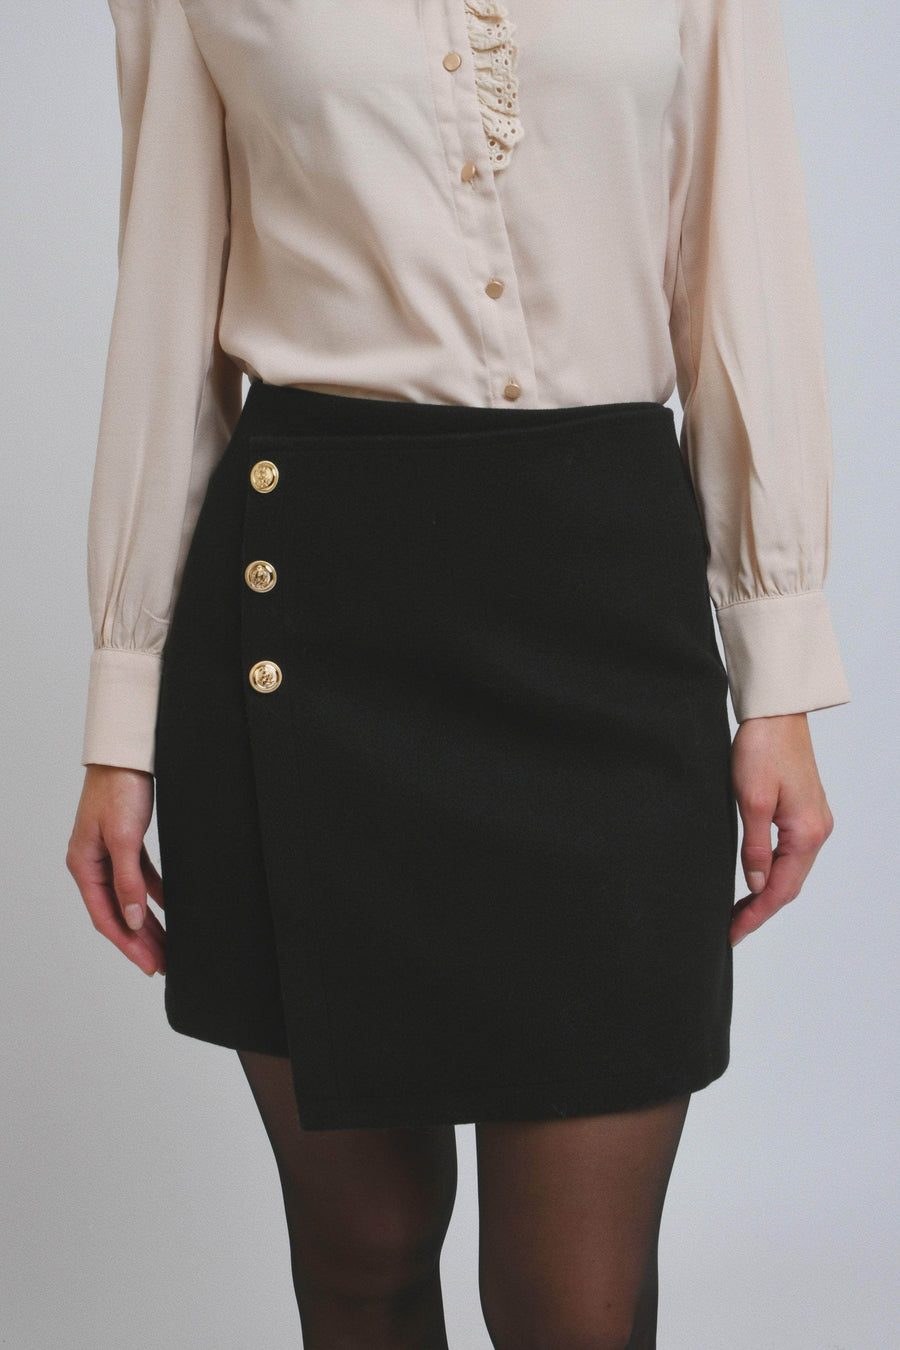 Pacifica skirt ✨